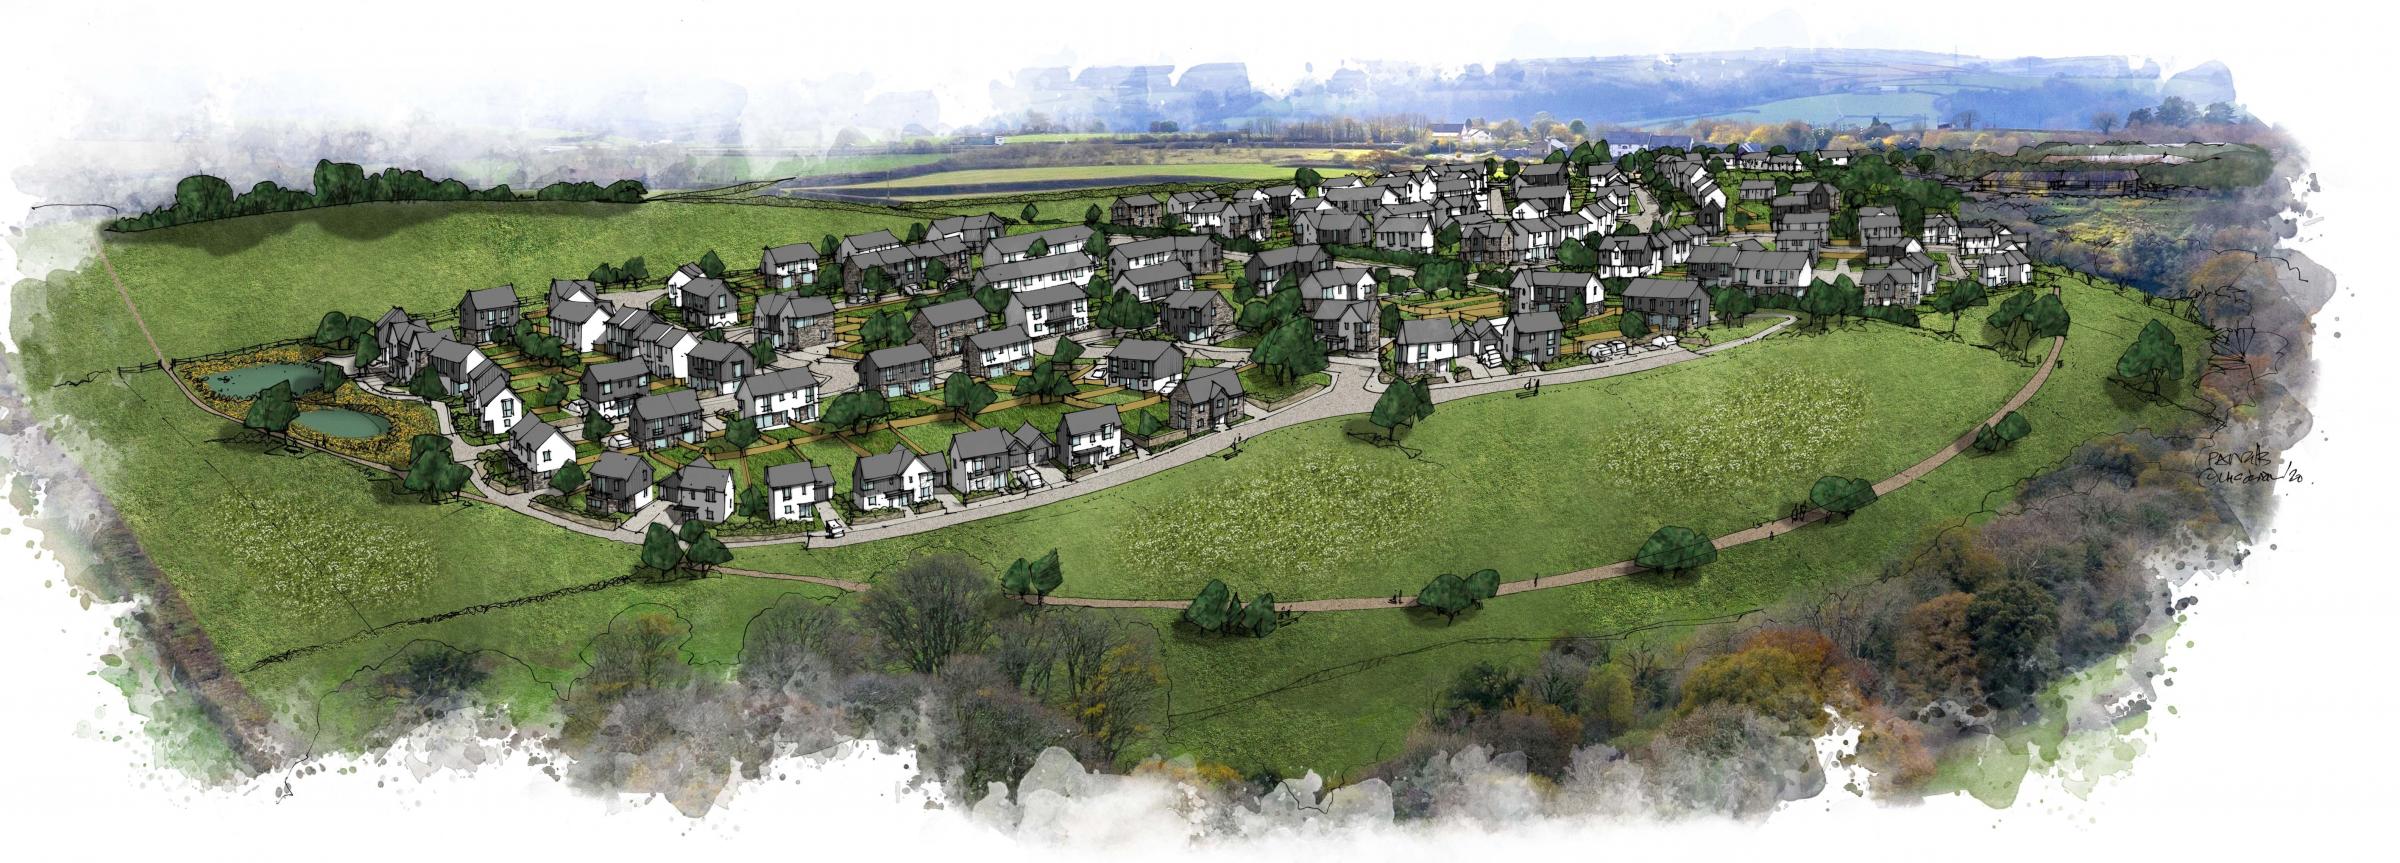 Artist\s impression of the proposed development at Tencreek, Liskeard (Image: Westcountry Land - landattencreek.co.uk)